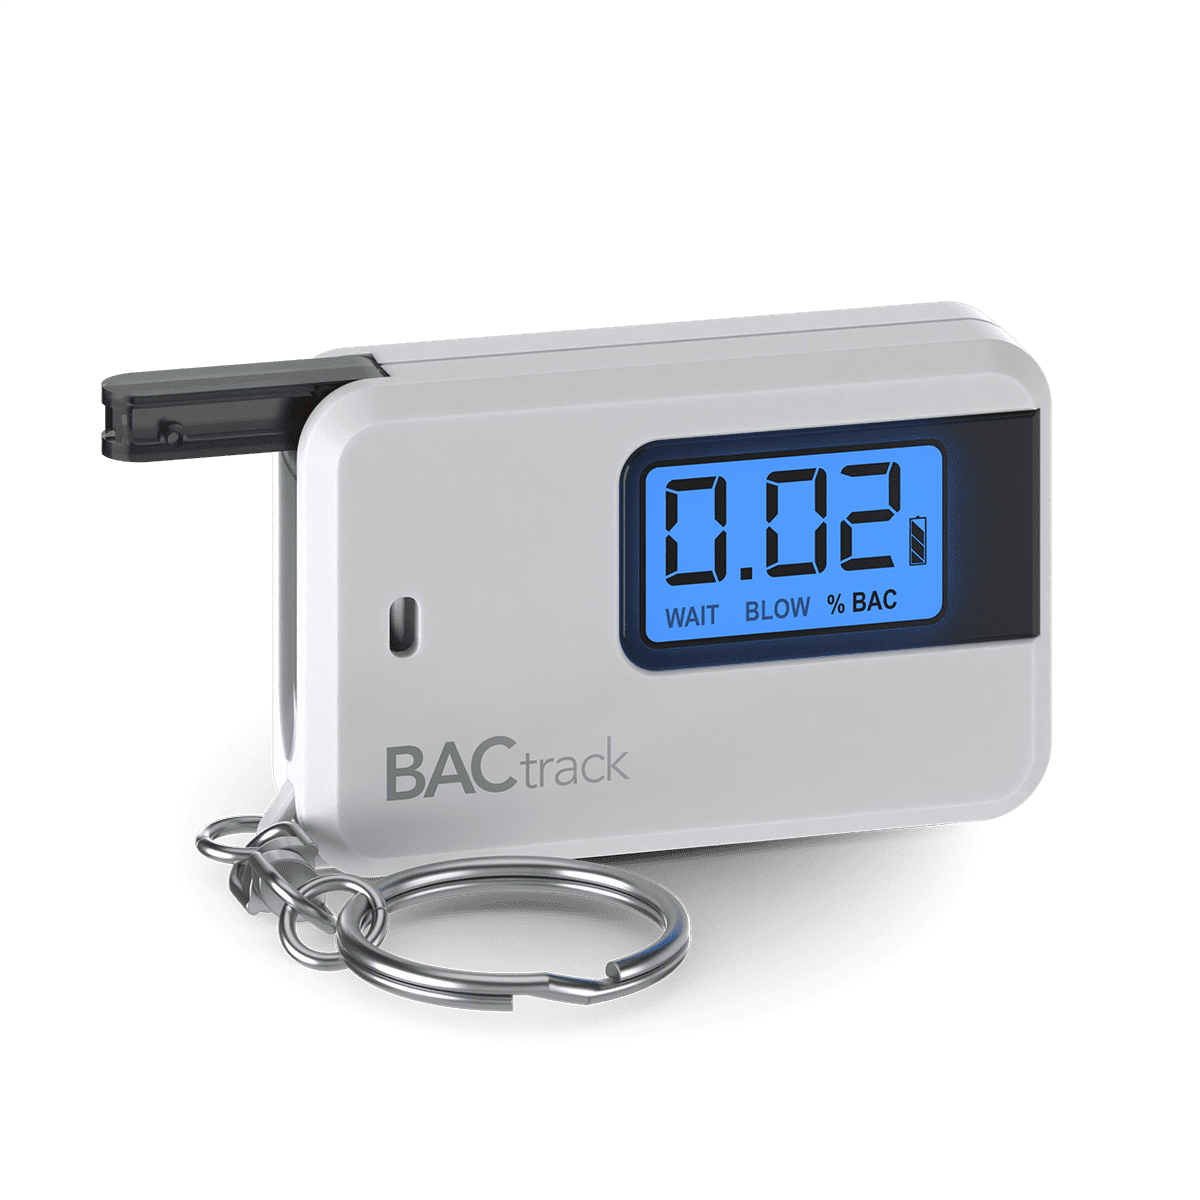 BACTRACK Go Portable Keychain Breathalyzer Personal Breath Alcohol Tester - Black